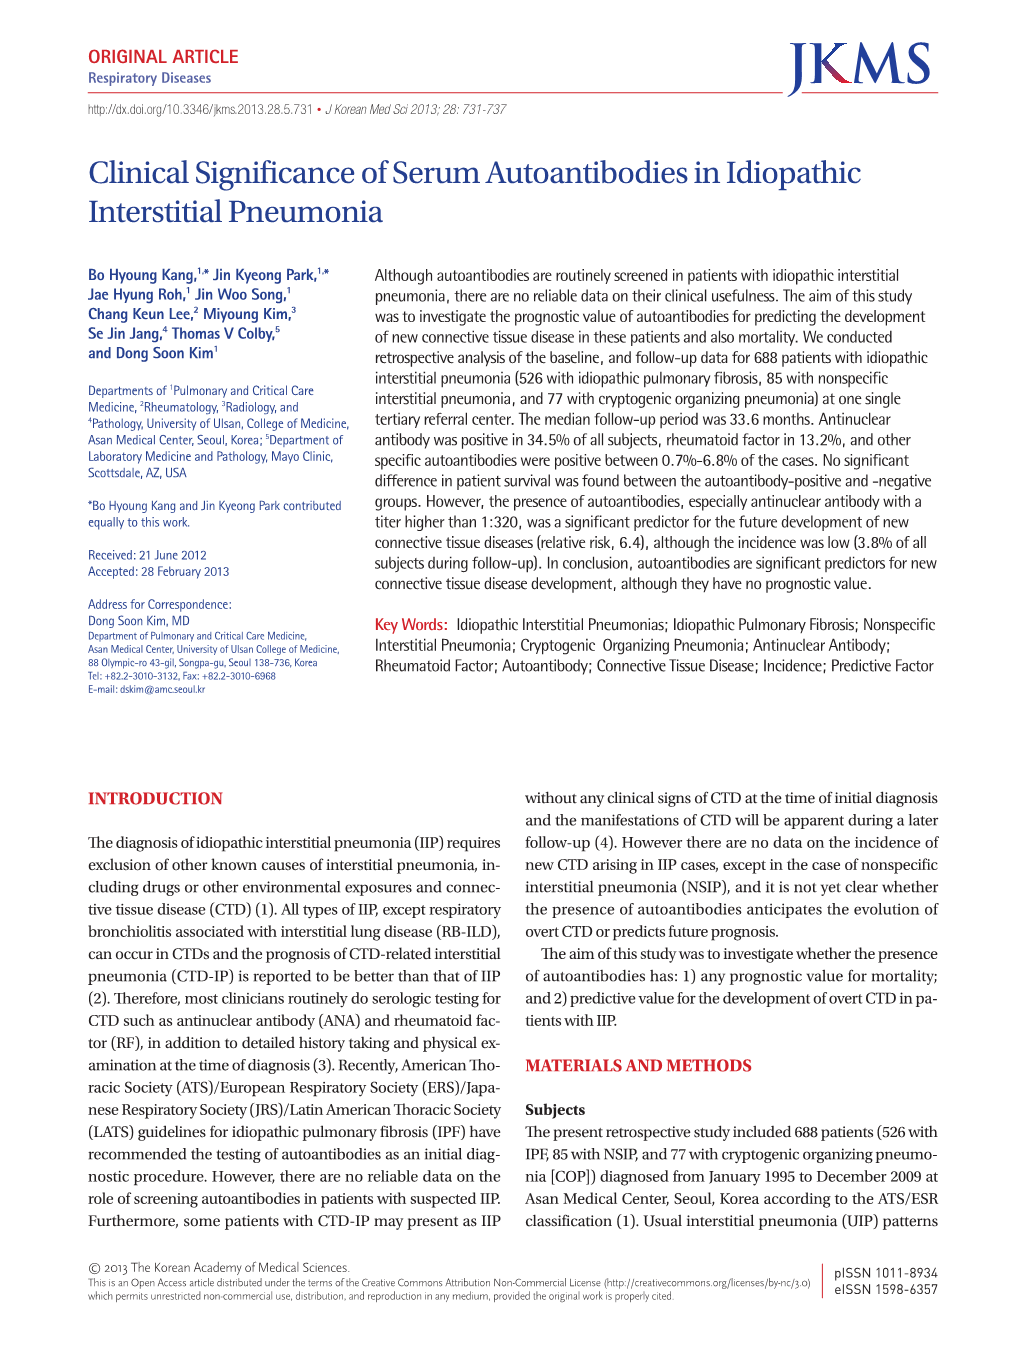 Clinical Significance of Serum Autoantibodies in Idiopathic Interstitial Pneumonia